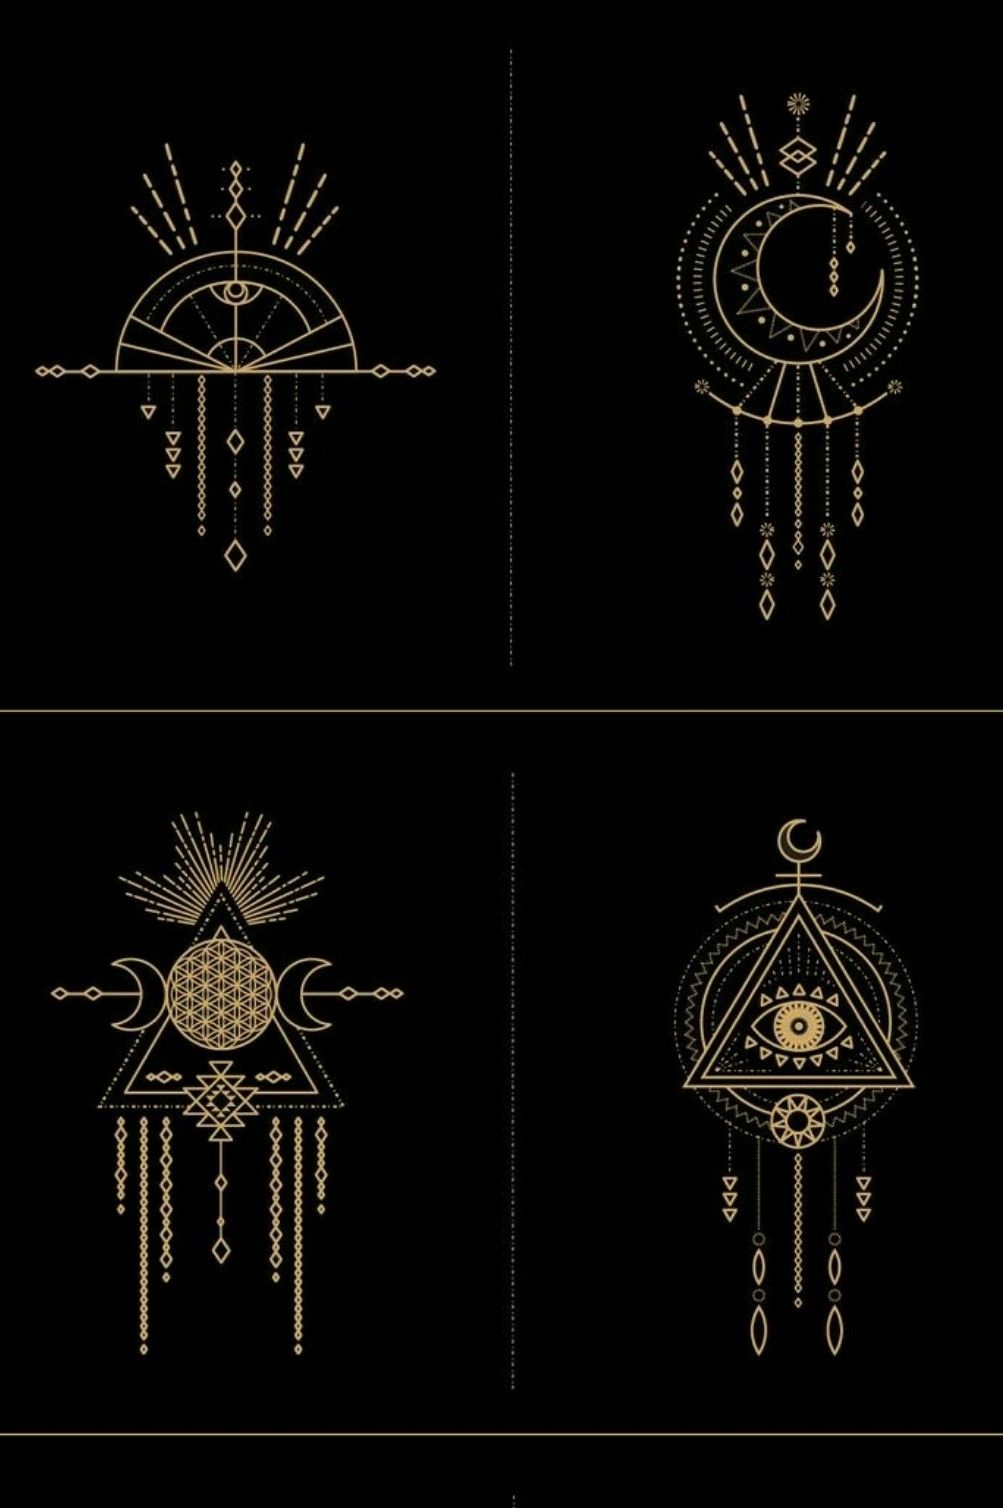 shaman tattoo designs